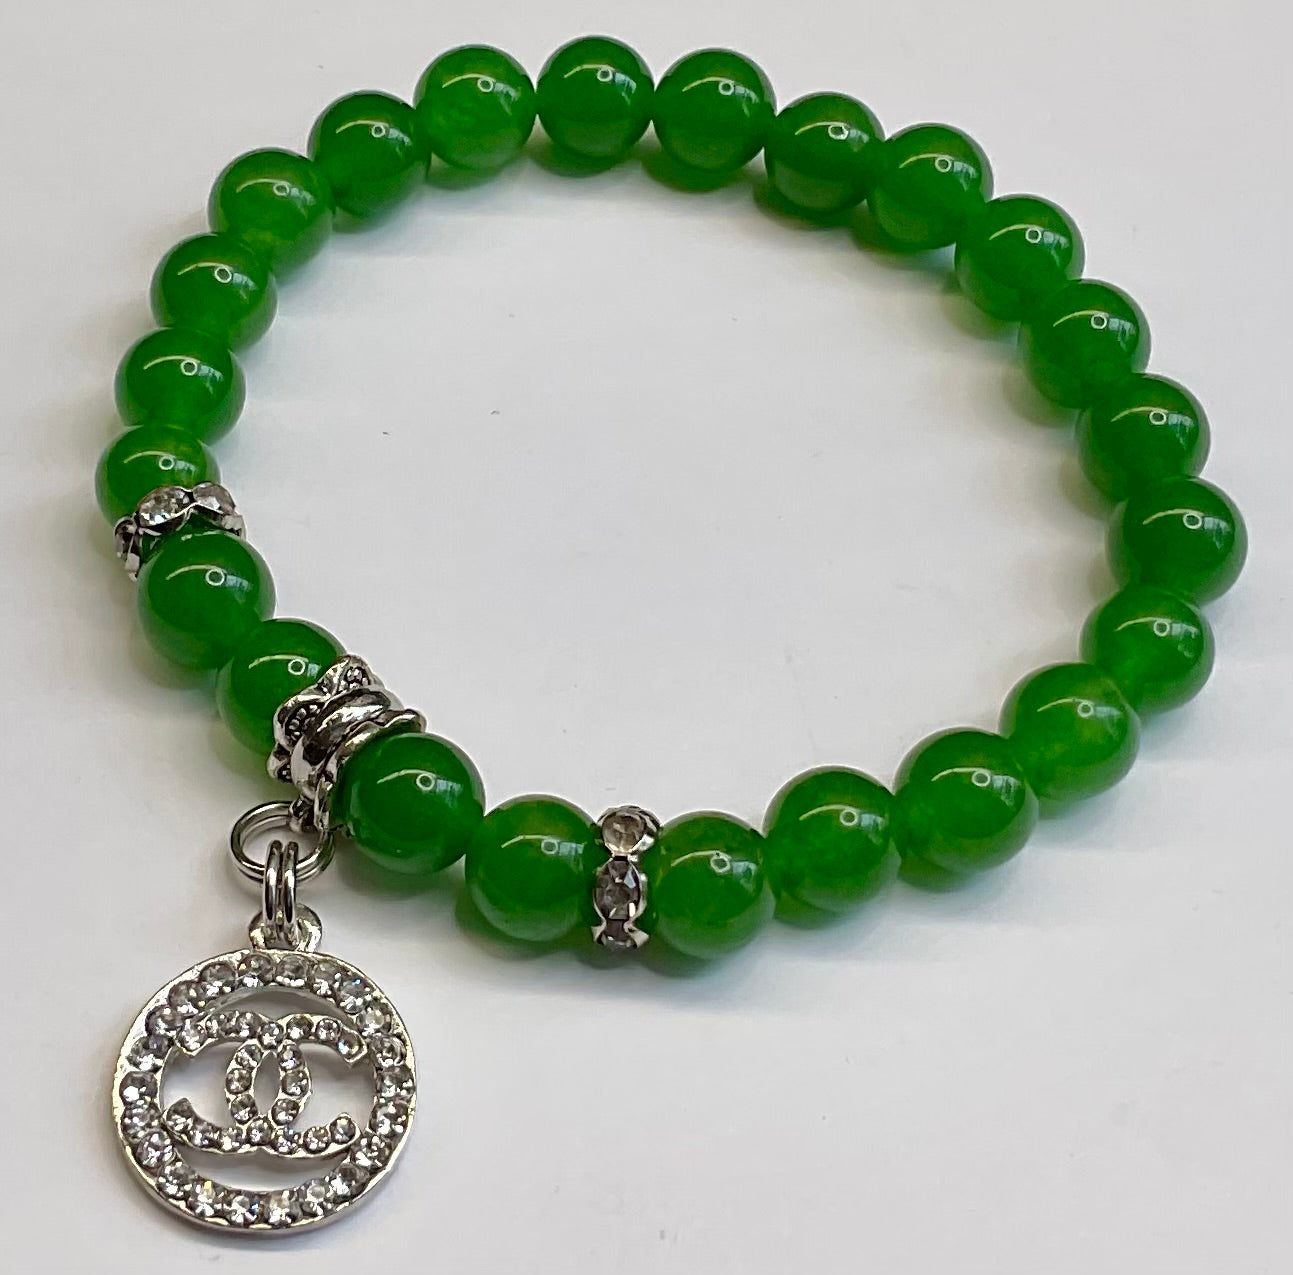 Green Jade with Rhinestone double “C” Dangle Charm